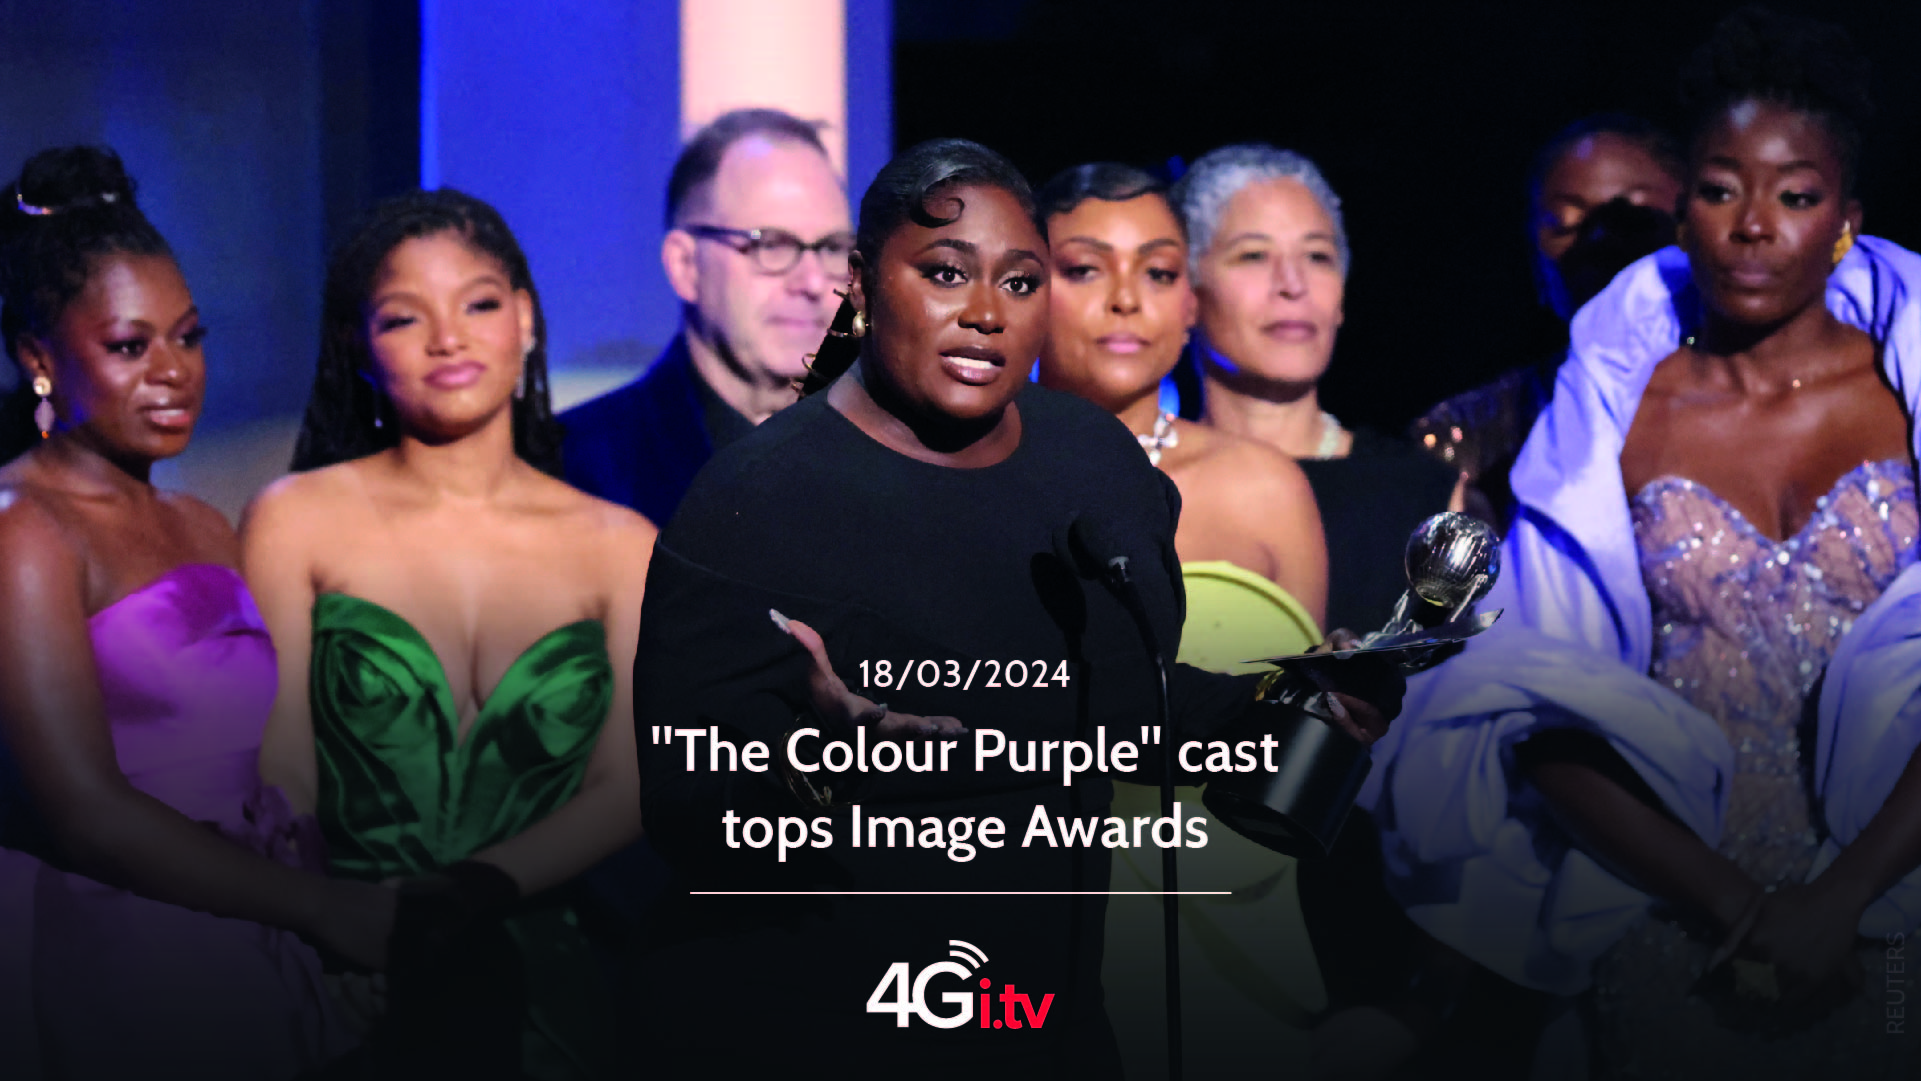 Подробнее о статье “The Colour Purple” cast tops Image Awards 